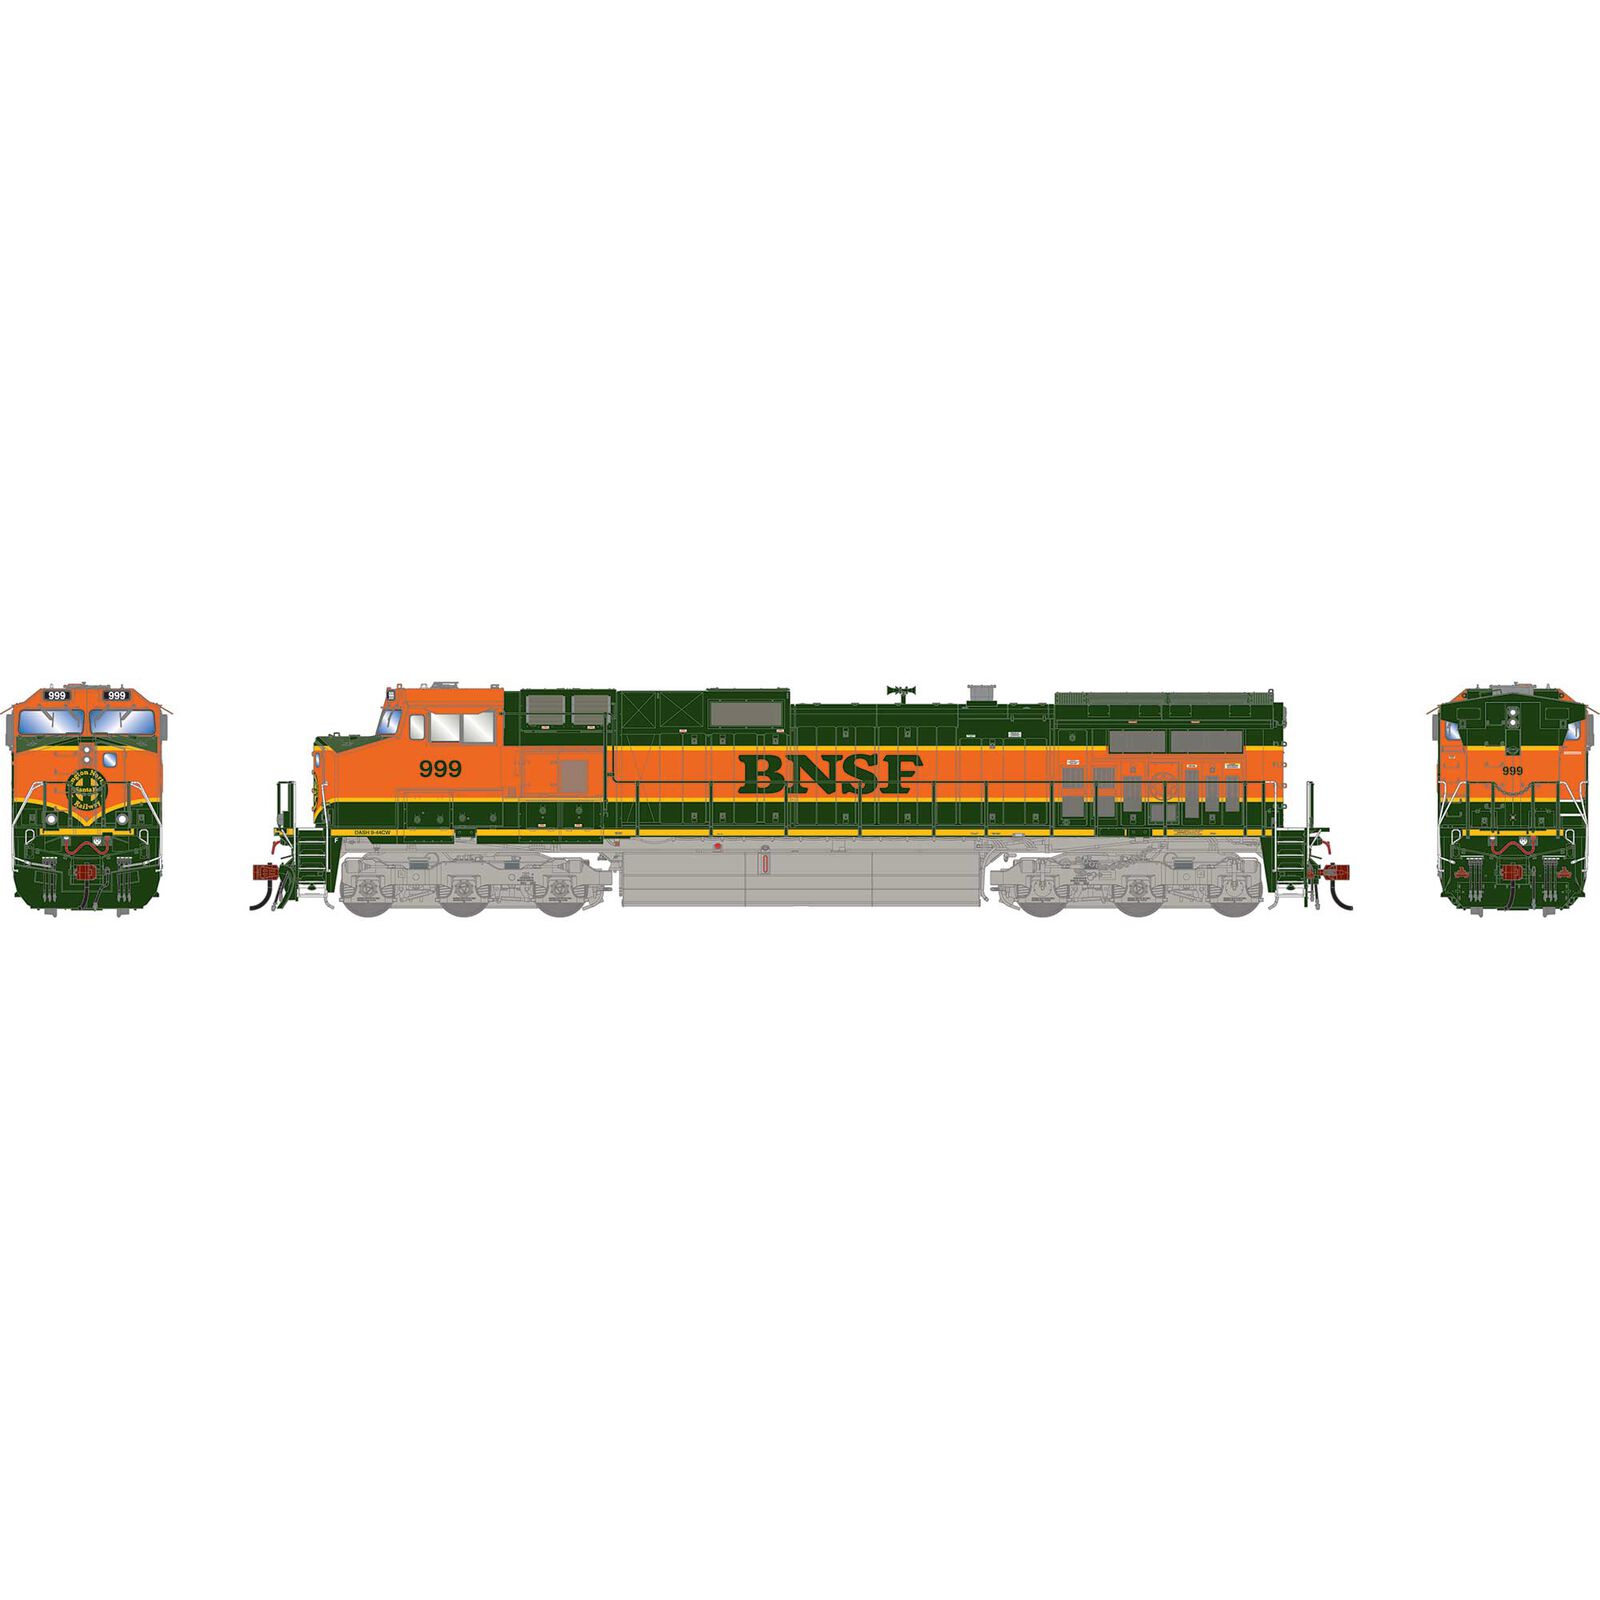 HO GE Dash 9-44CW Locomotive with DCC & Sound, BNSF Heritage I #999